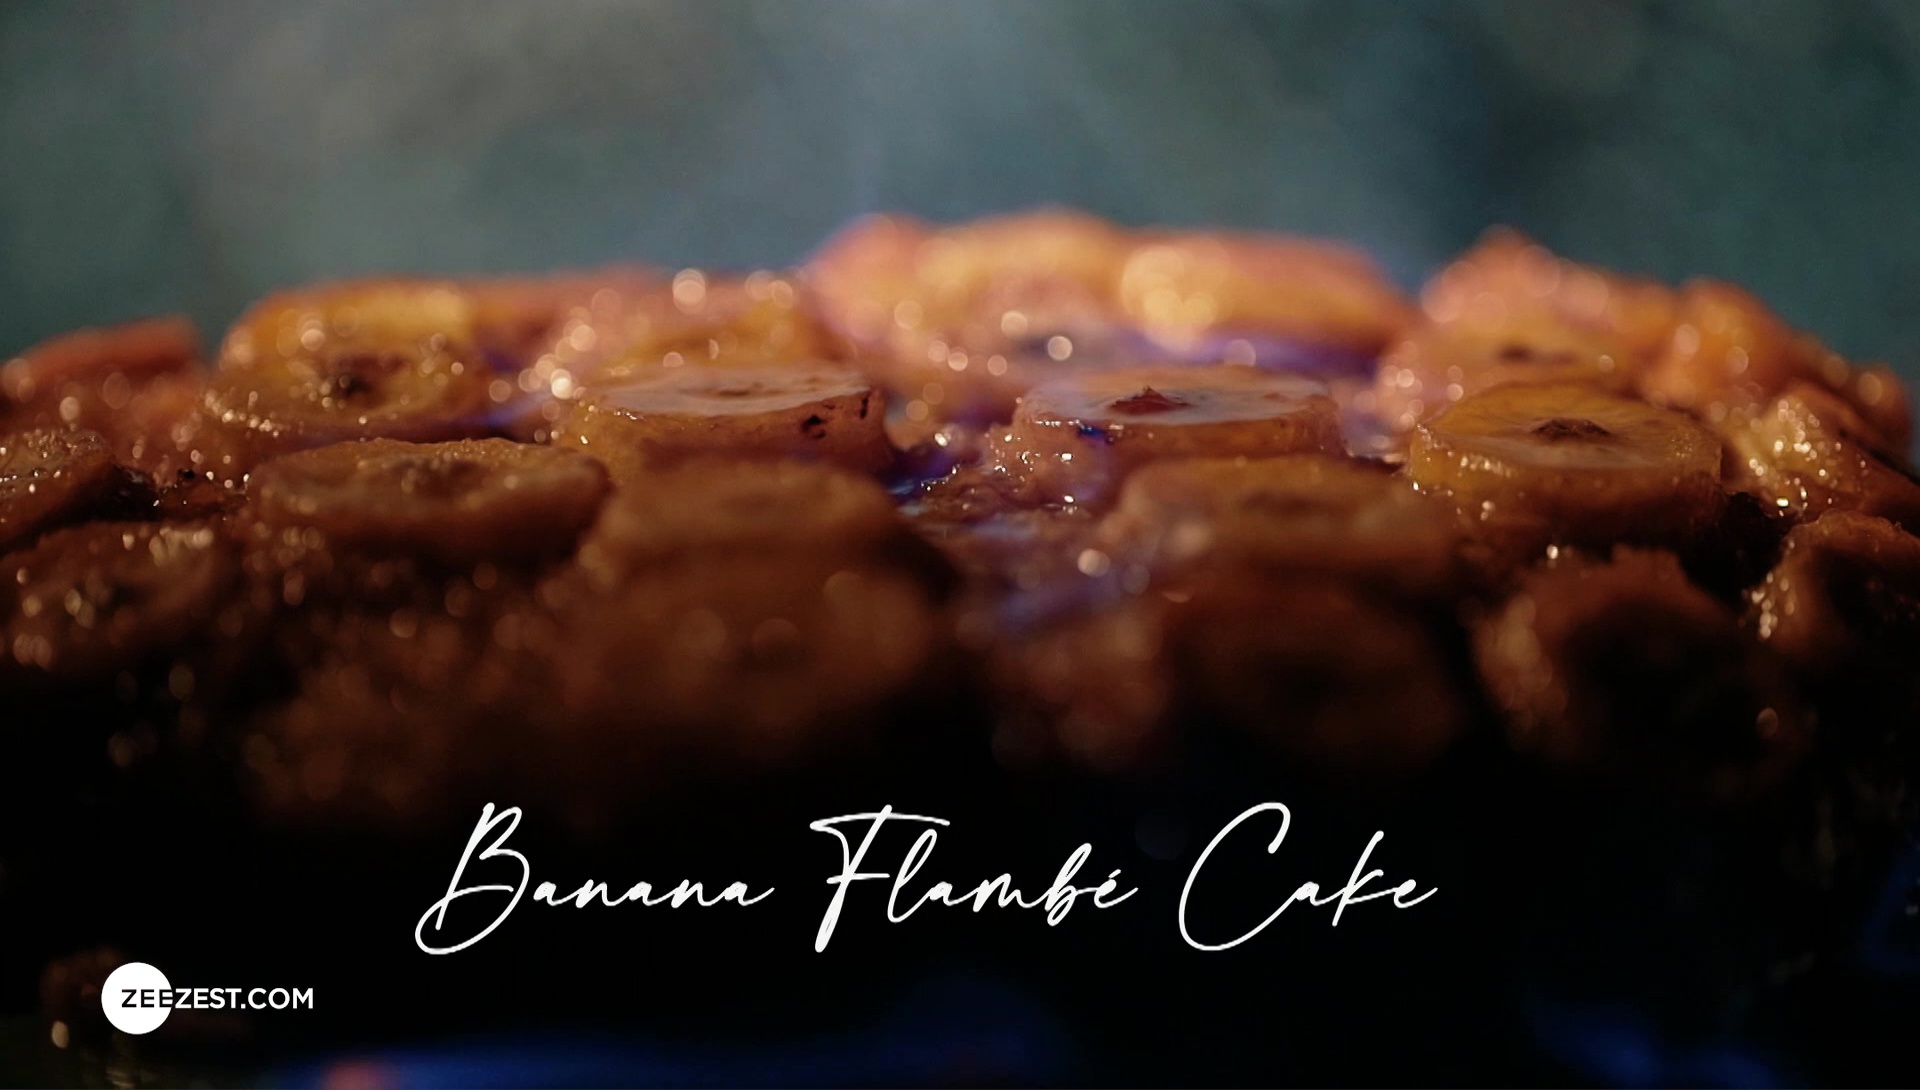 Banana Flambe Cake